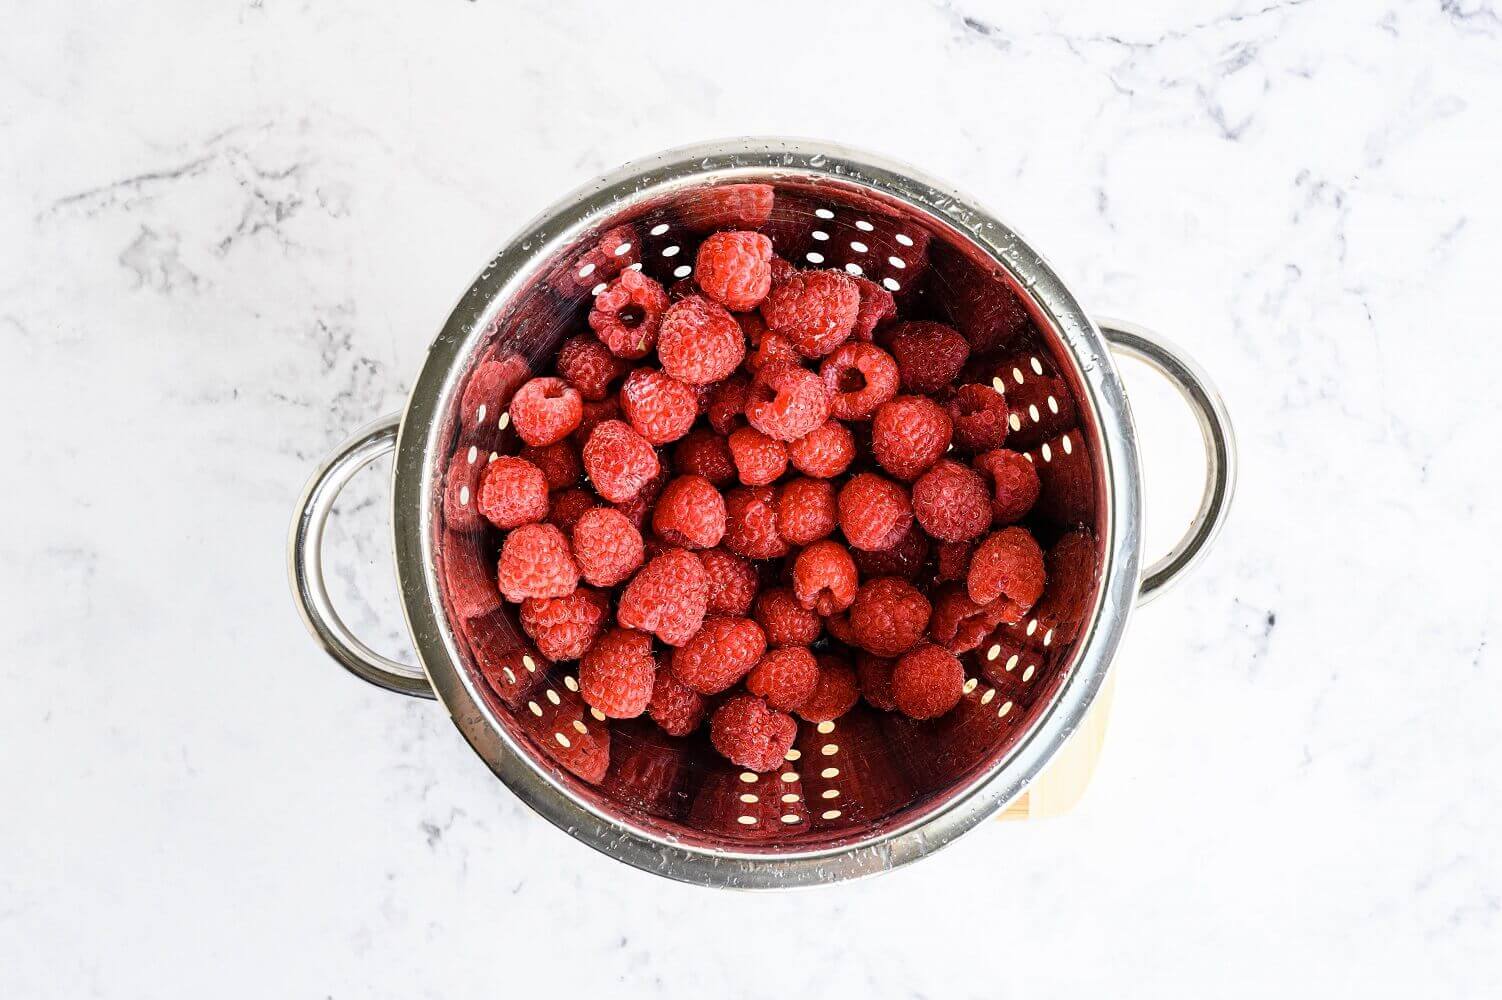 Rinse the raspberries